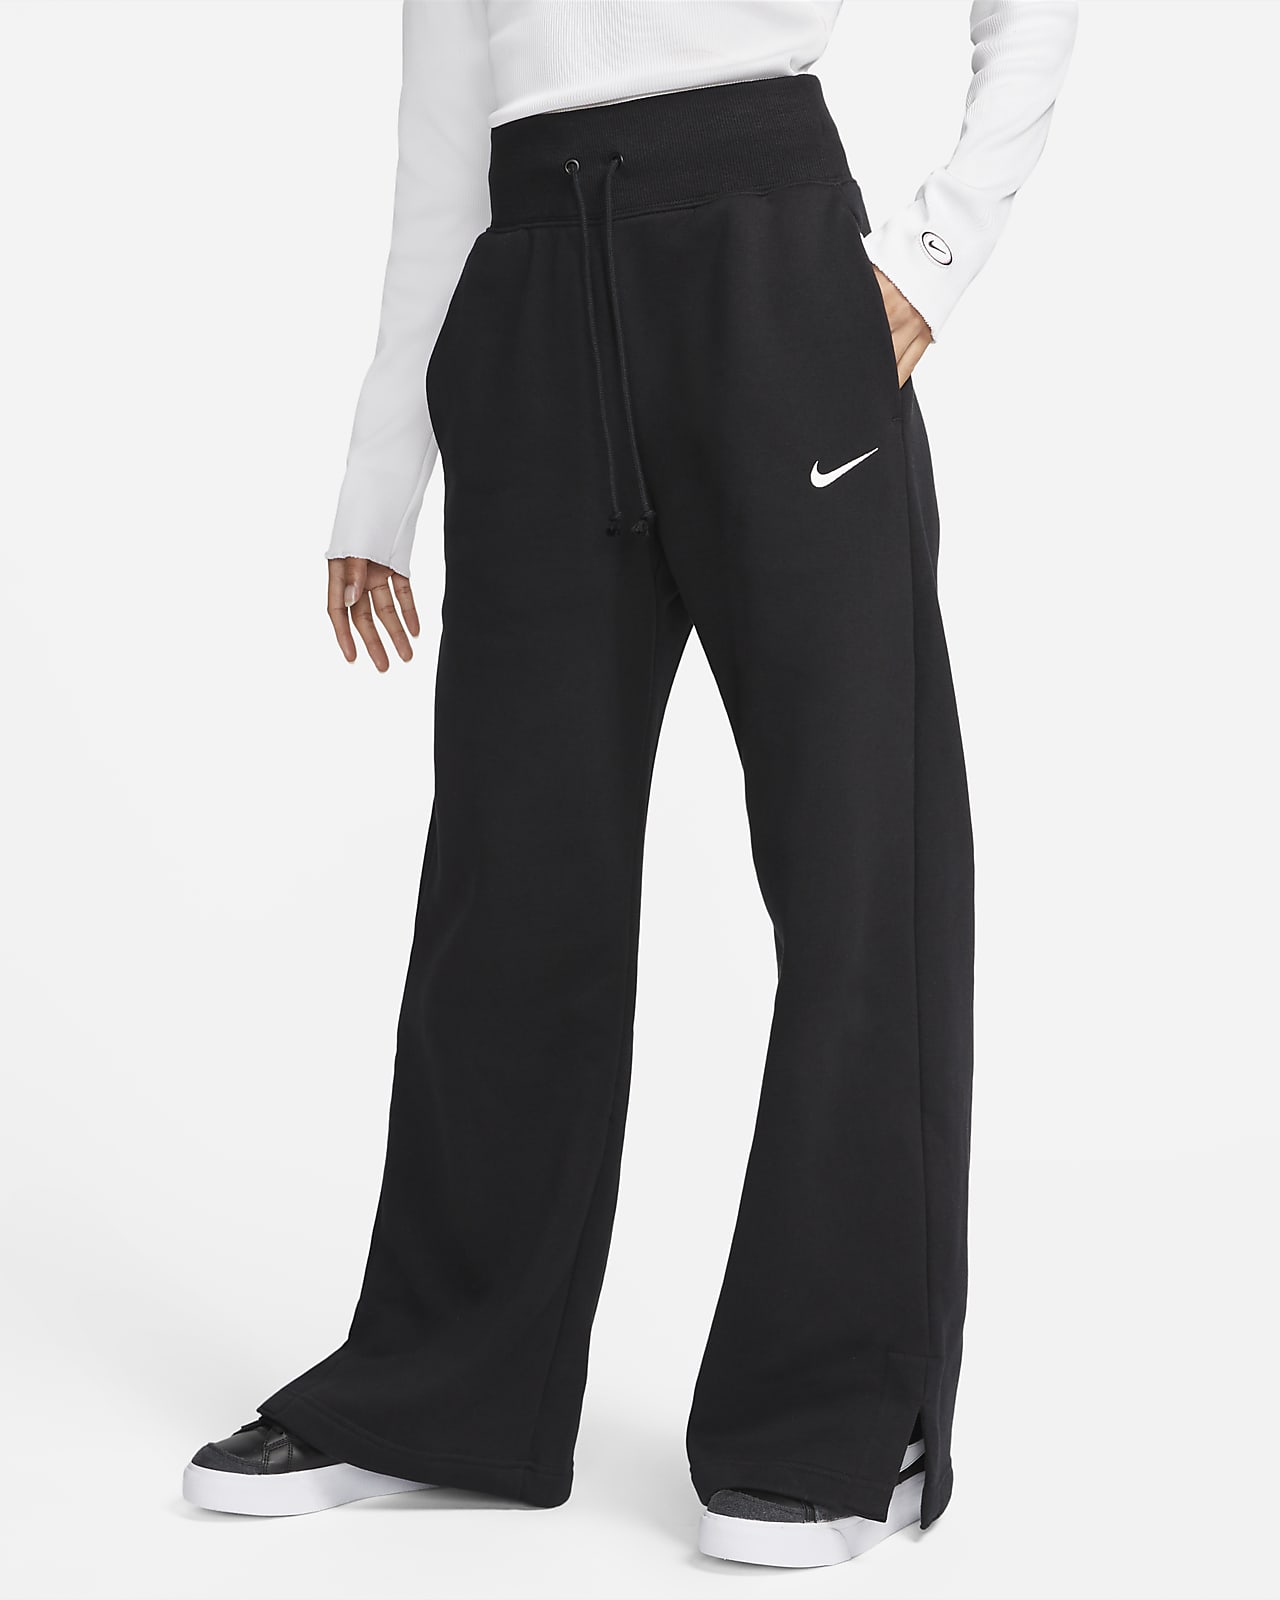 Pantalon Nike Sportswear Mujer Gris